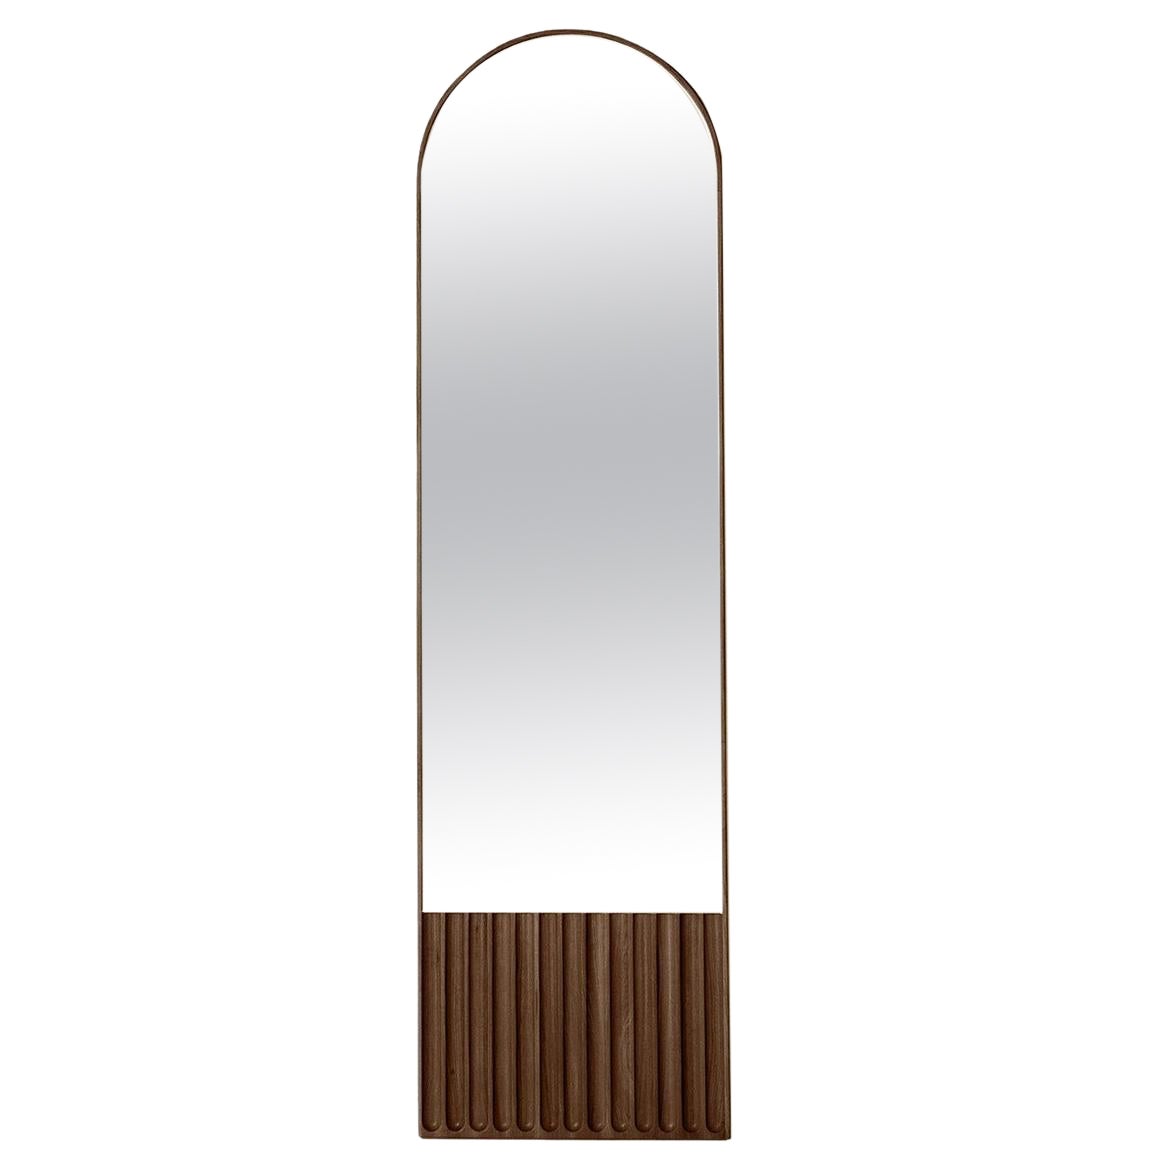 Tutto Sesto Solid Wood Oval Mirror, Ash in Brown Finish, Contemporary